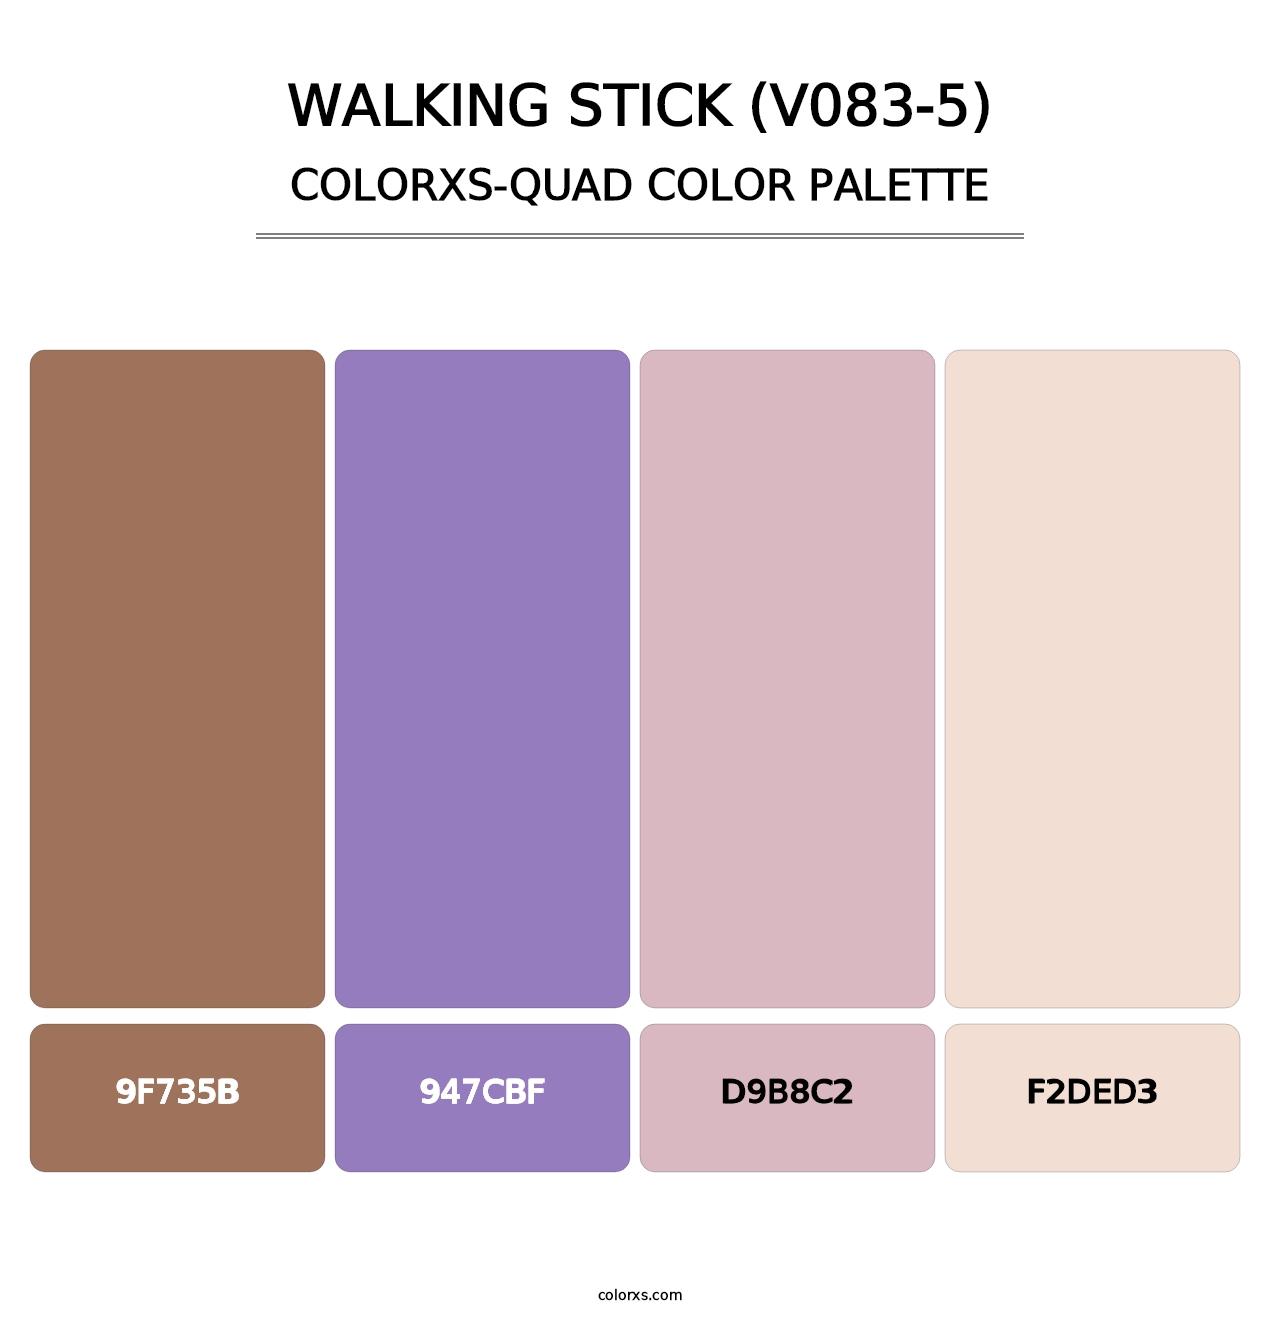 Walking Stick (V083-5) - Colorxs Quad Palette